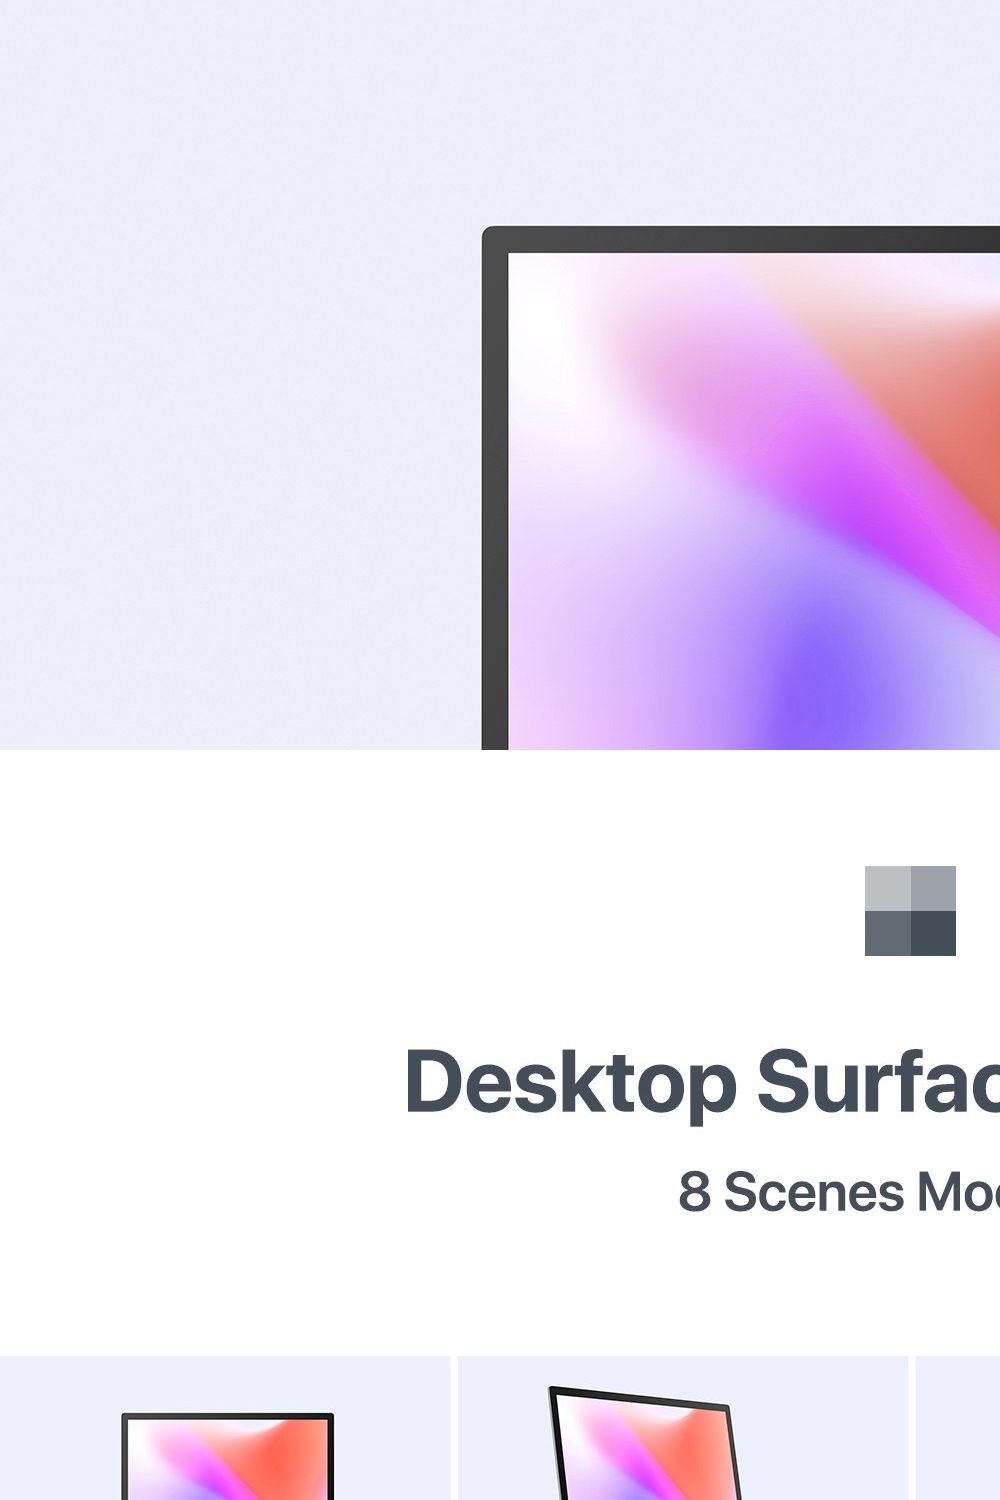 Desktop Surface Studio 2 - Mockups pinterest preview image.